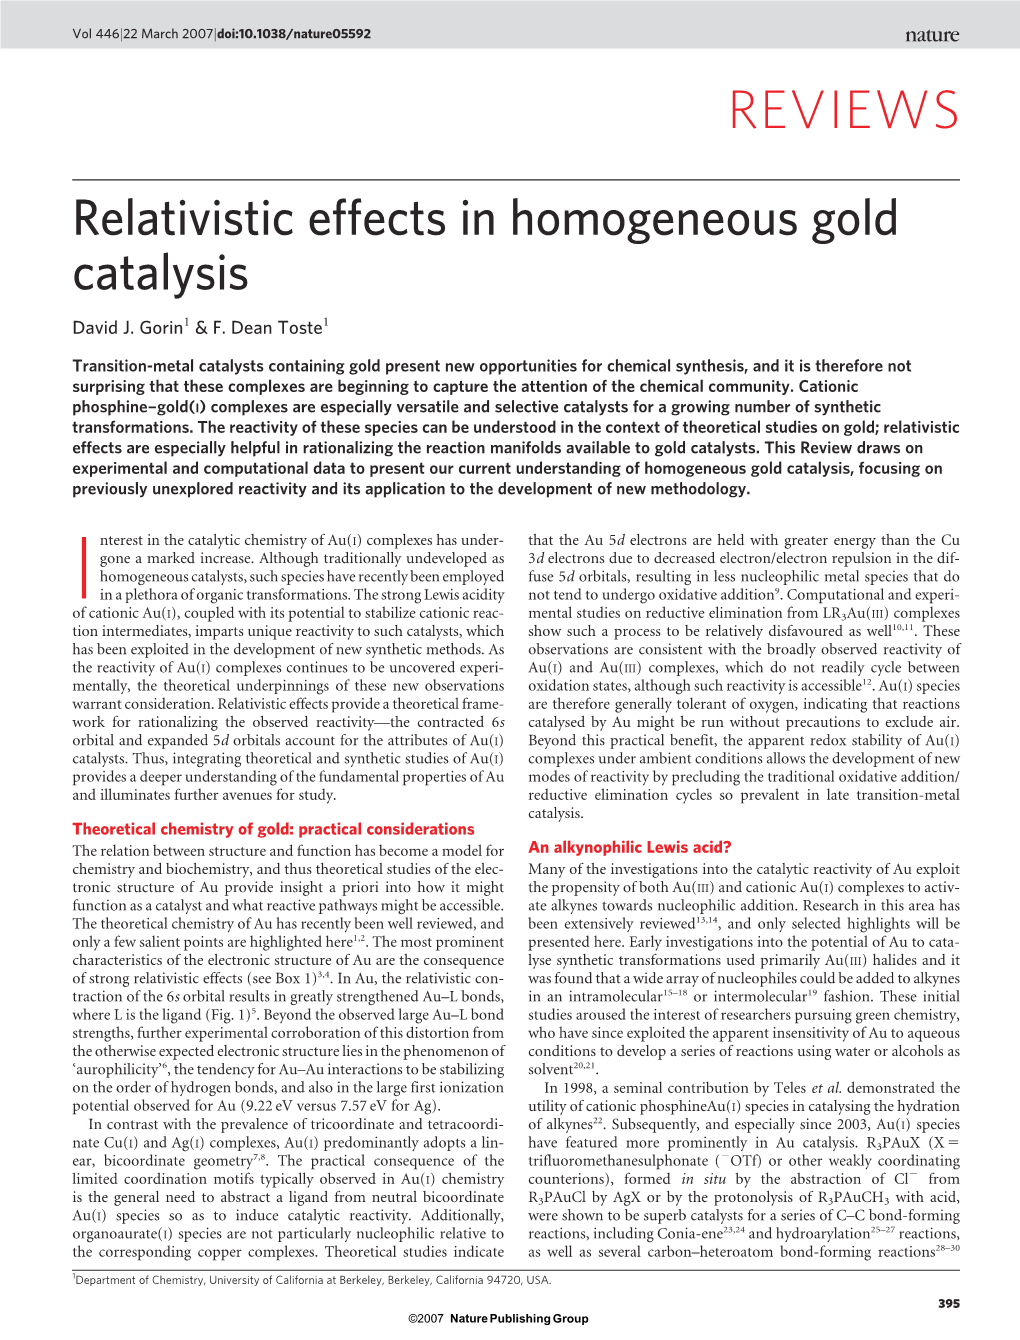 Relativistic Effects in Homogeneous Gold Catalysis